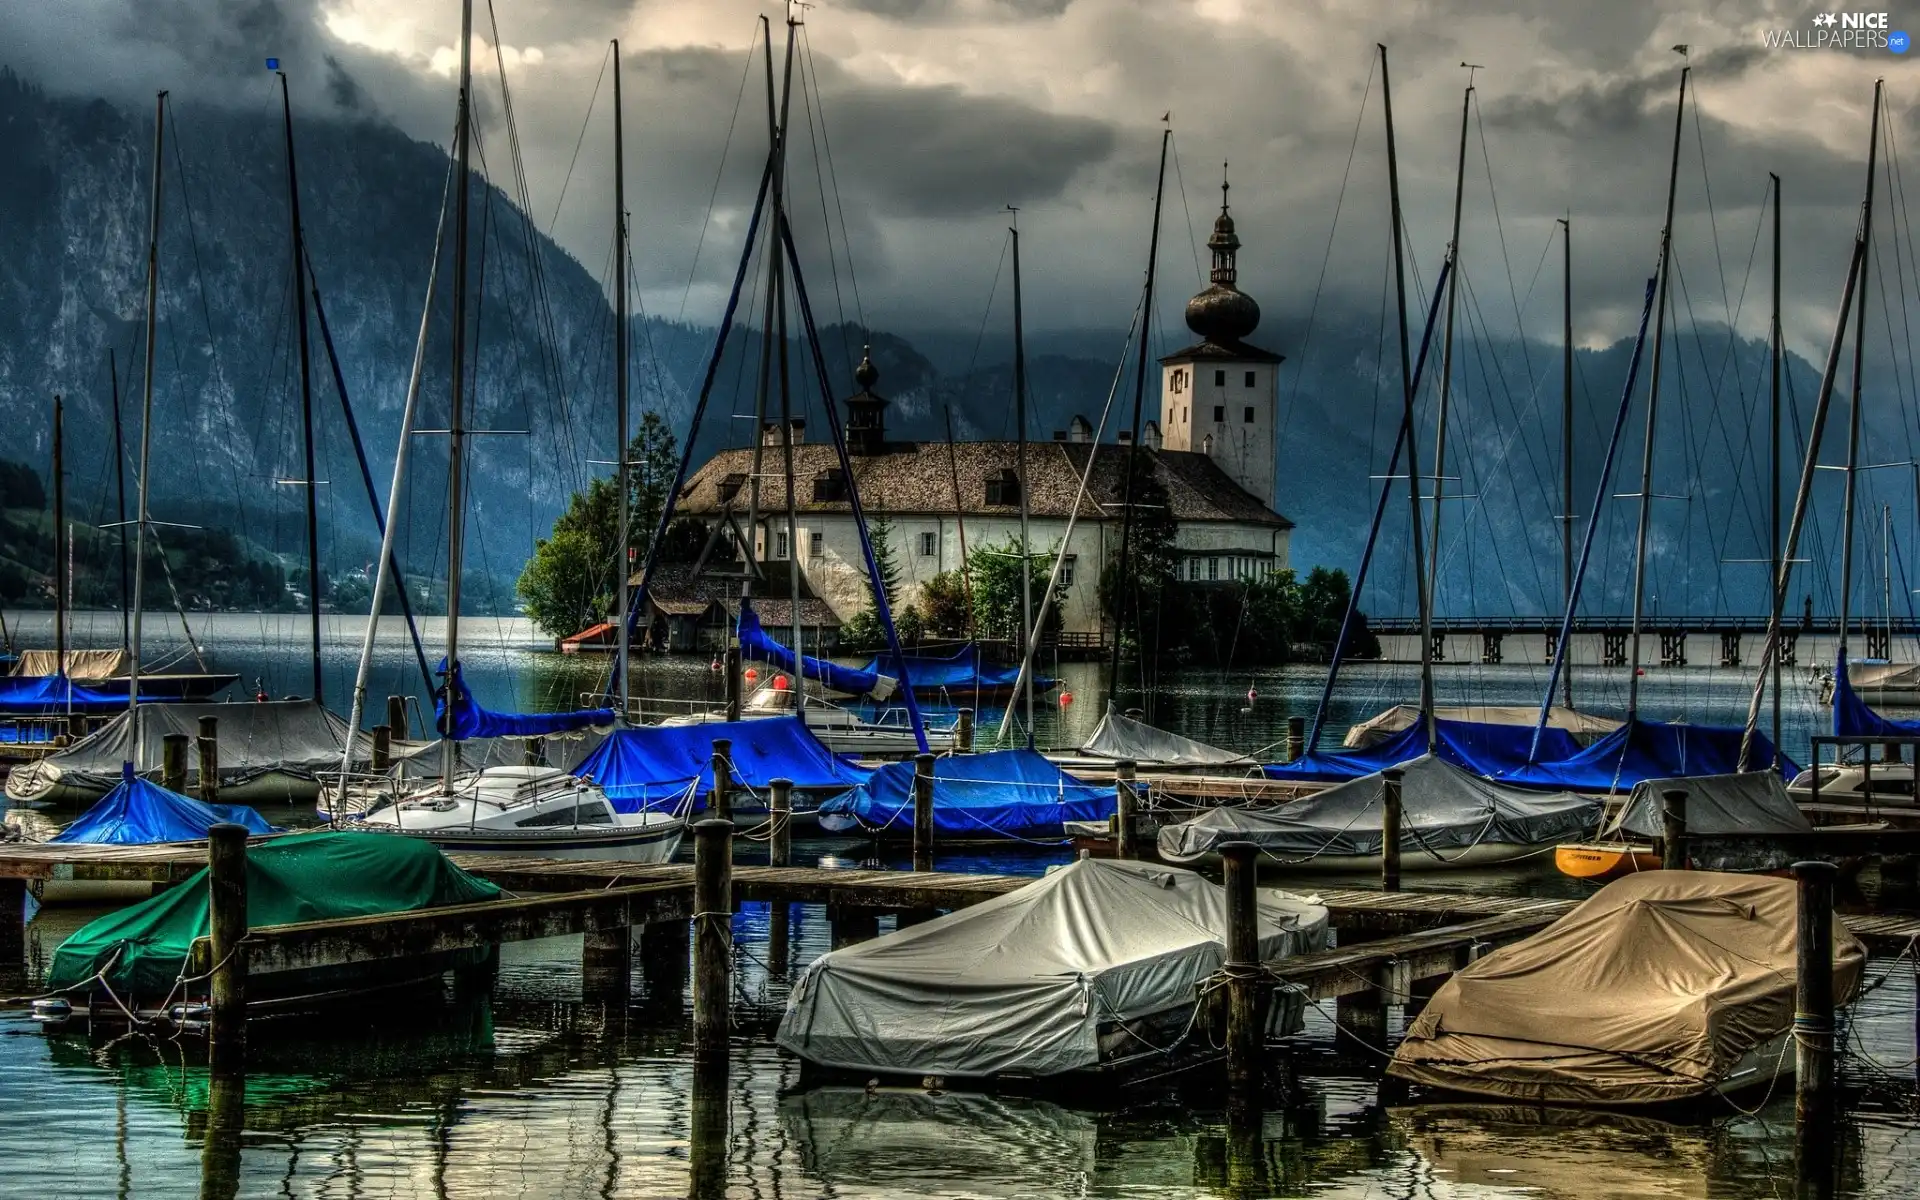 Church, Boats, water, Mountains